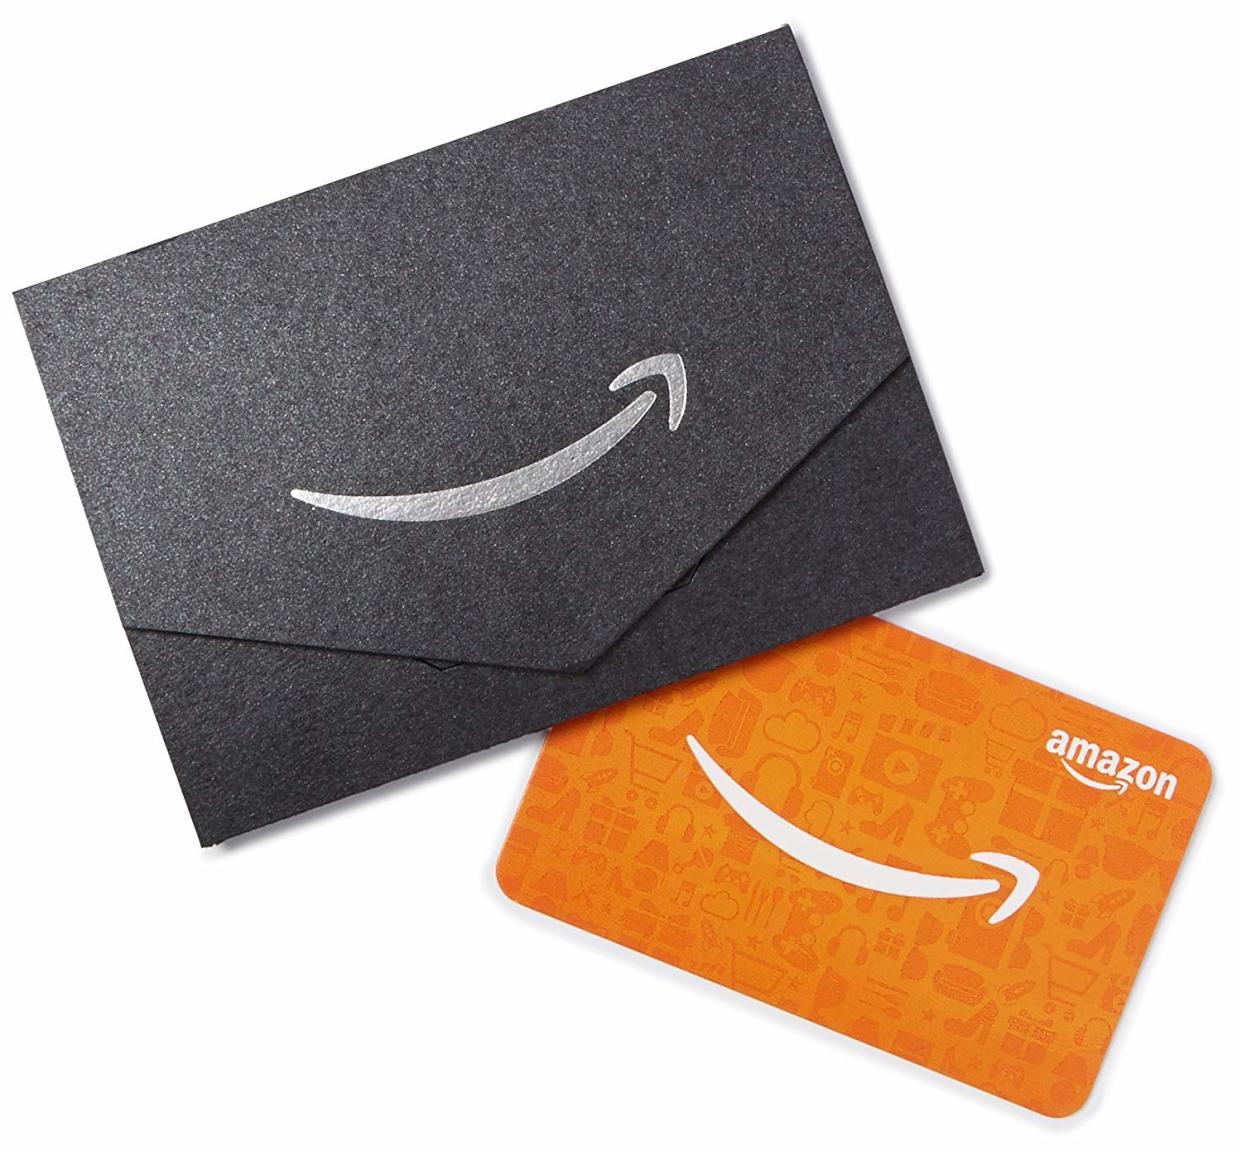 Amazon Gift Card Envelope